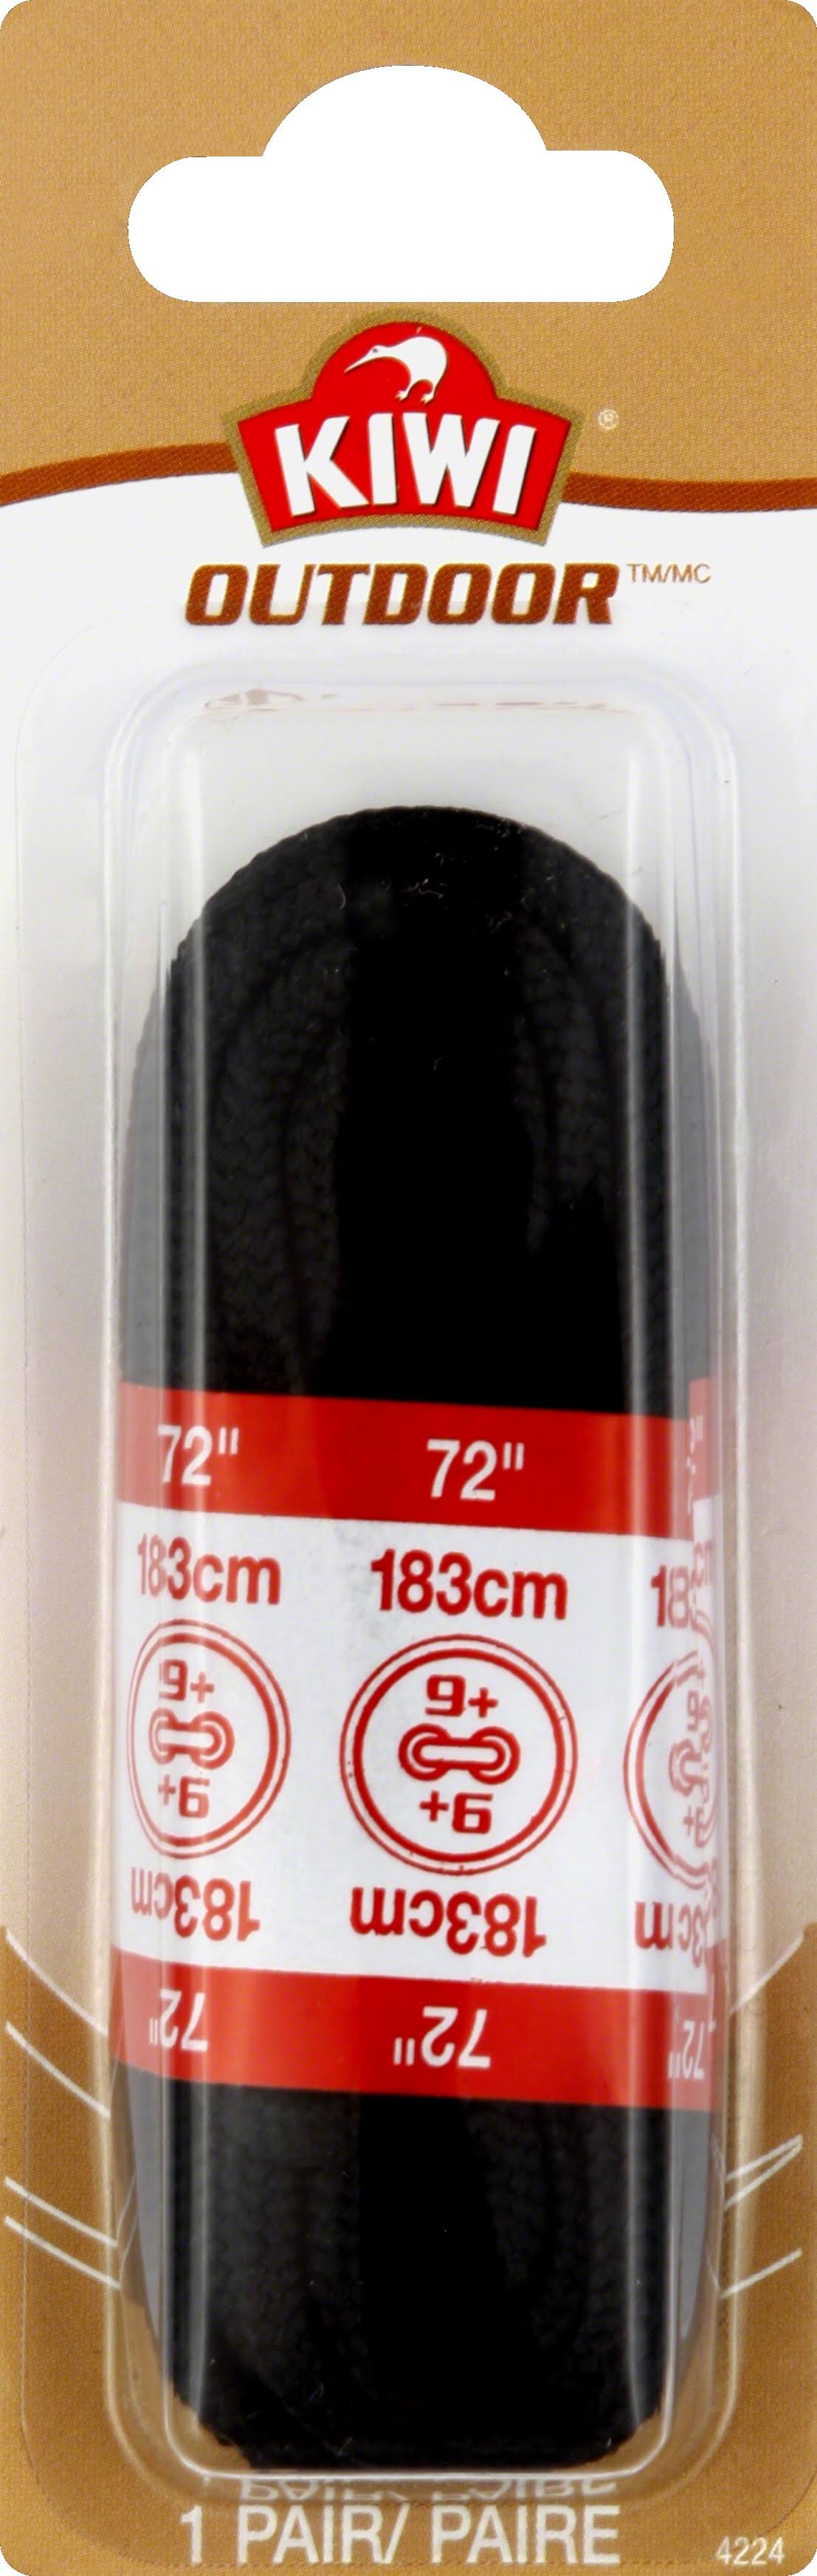 Kiwi Outdoor Boot Lace - Black, Round, 183cm